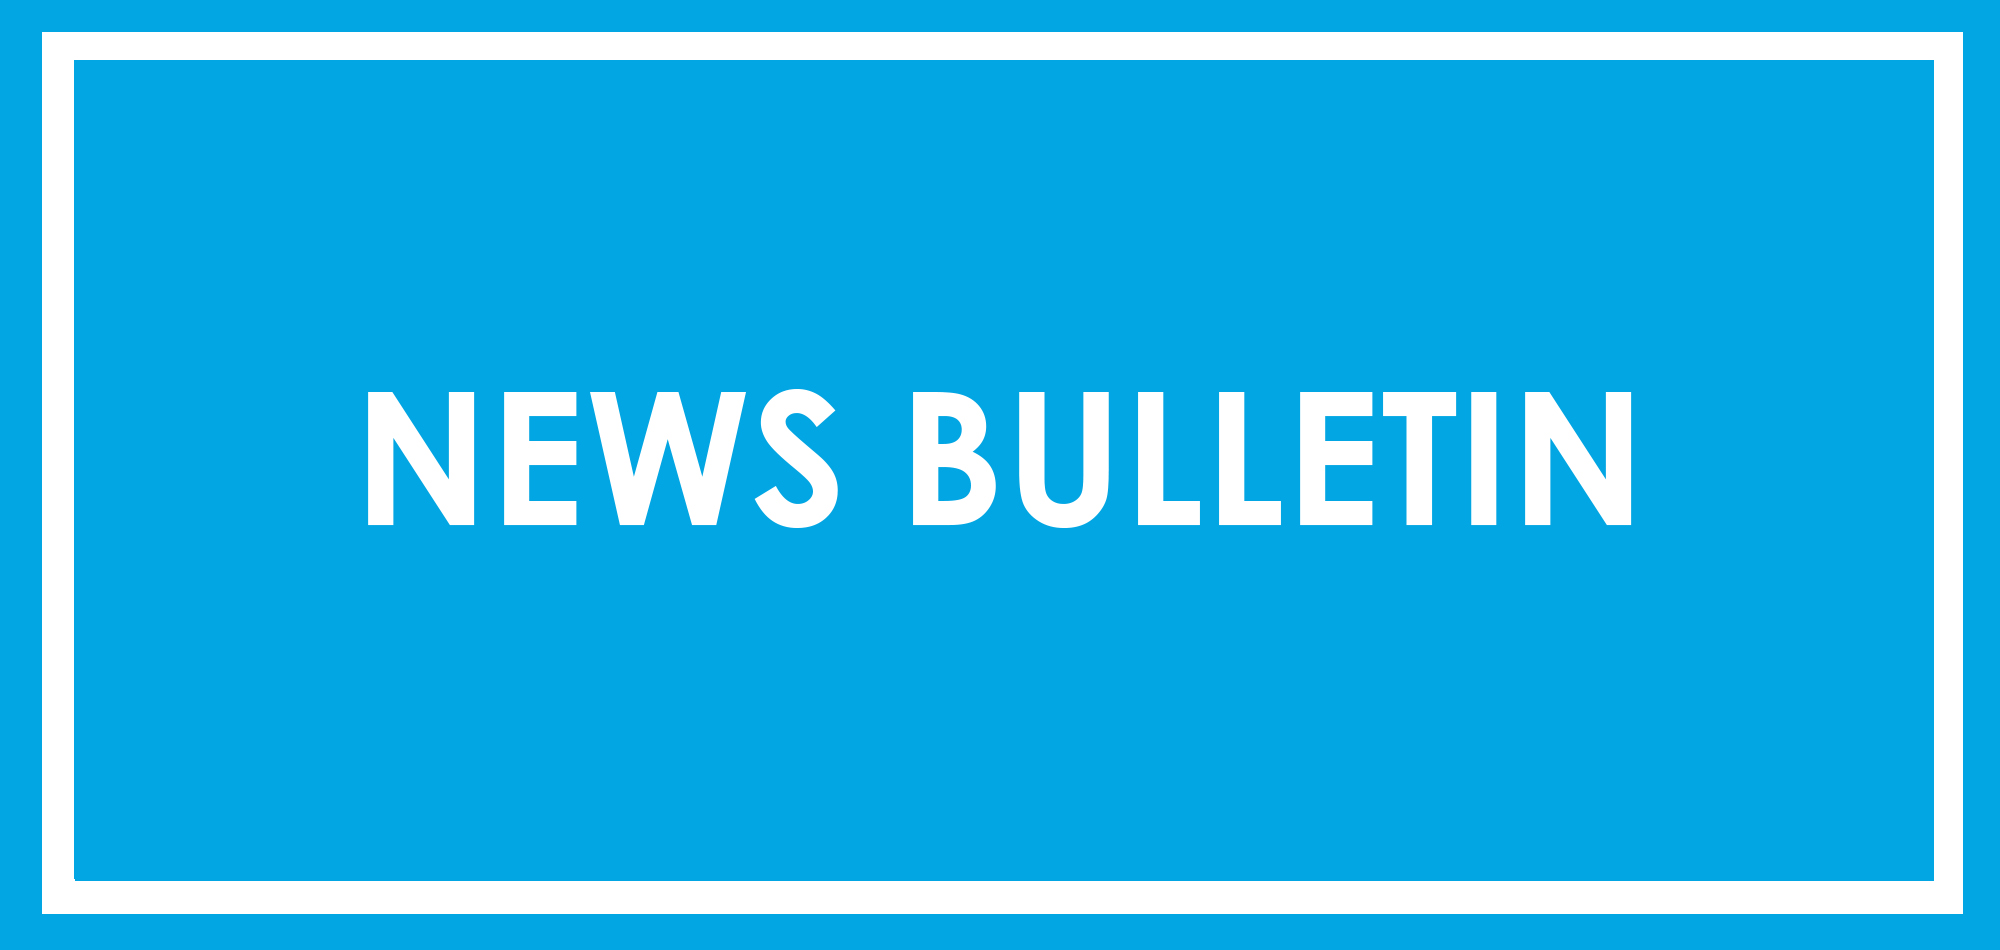 News Bulletin - 03.03.21